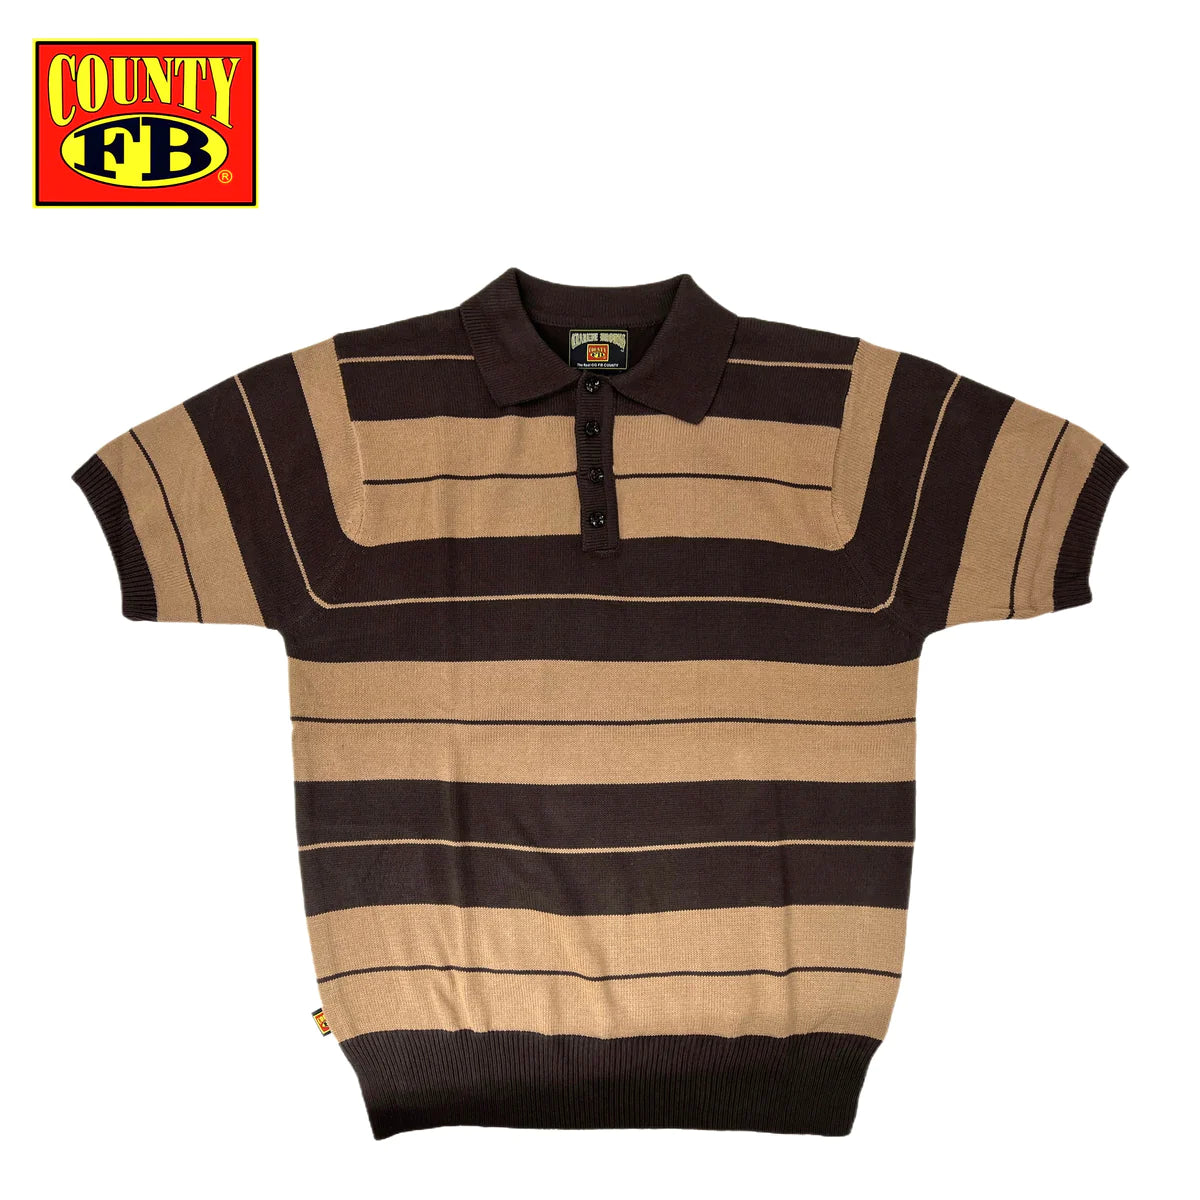 FB County Charlie Brown Shirt